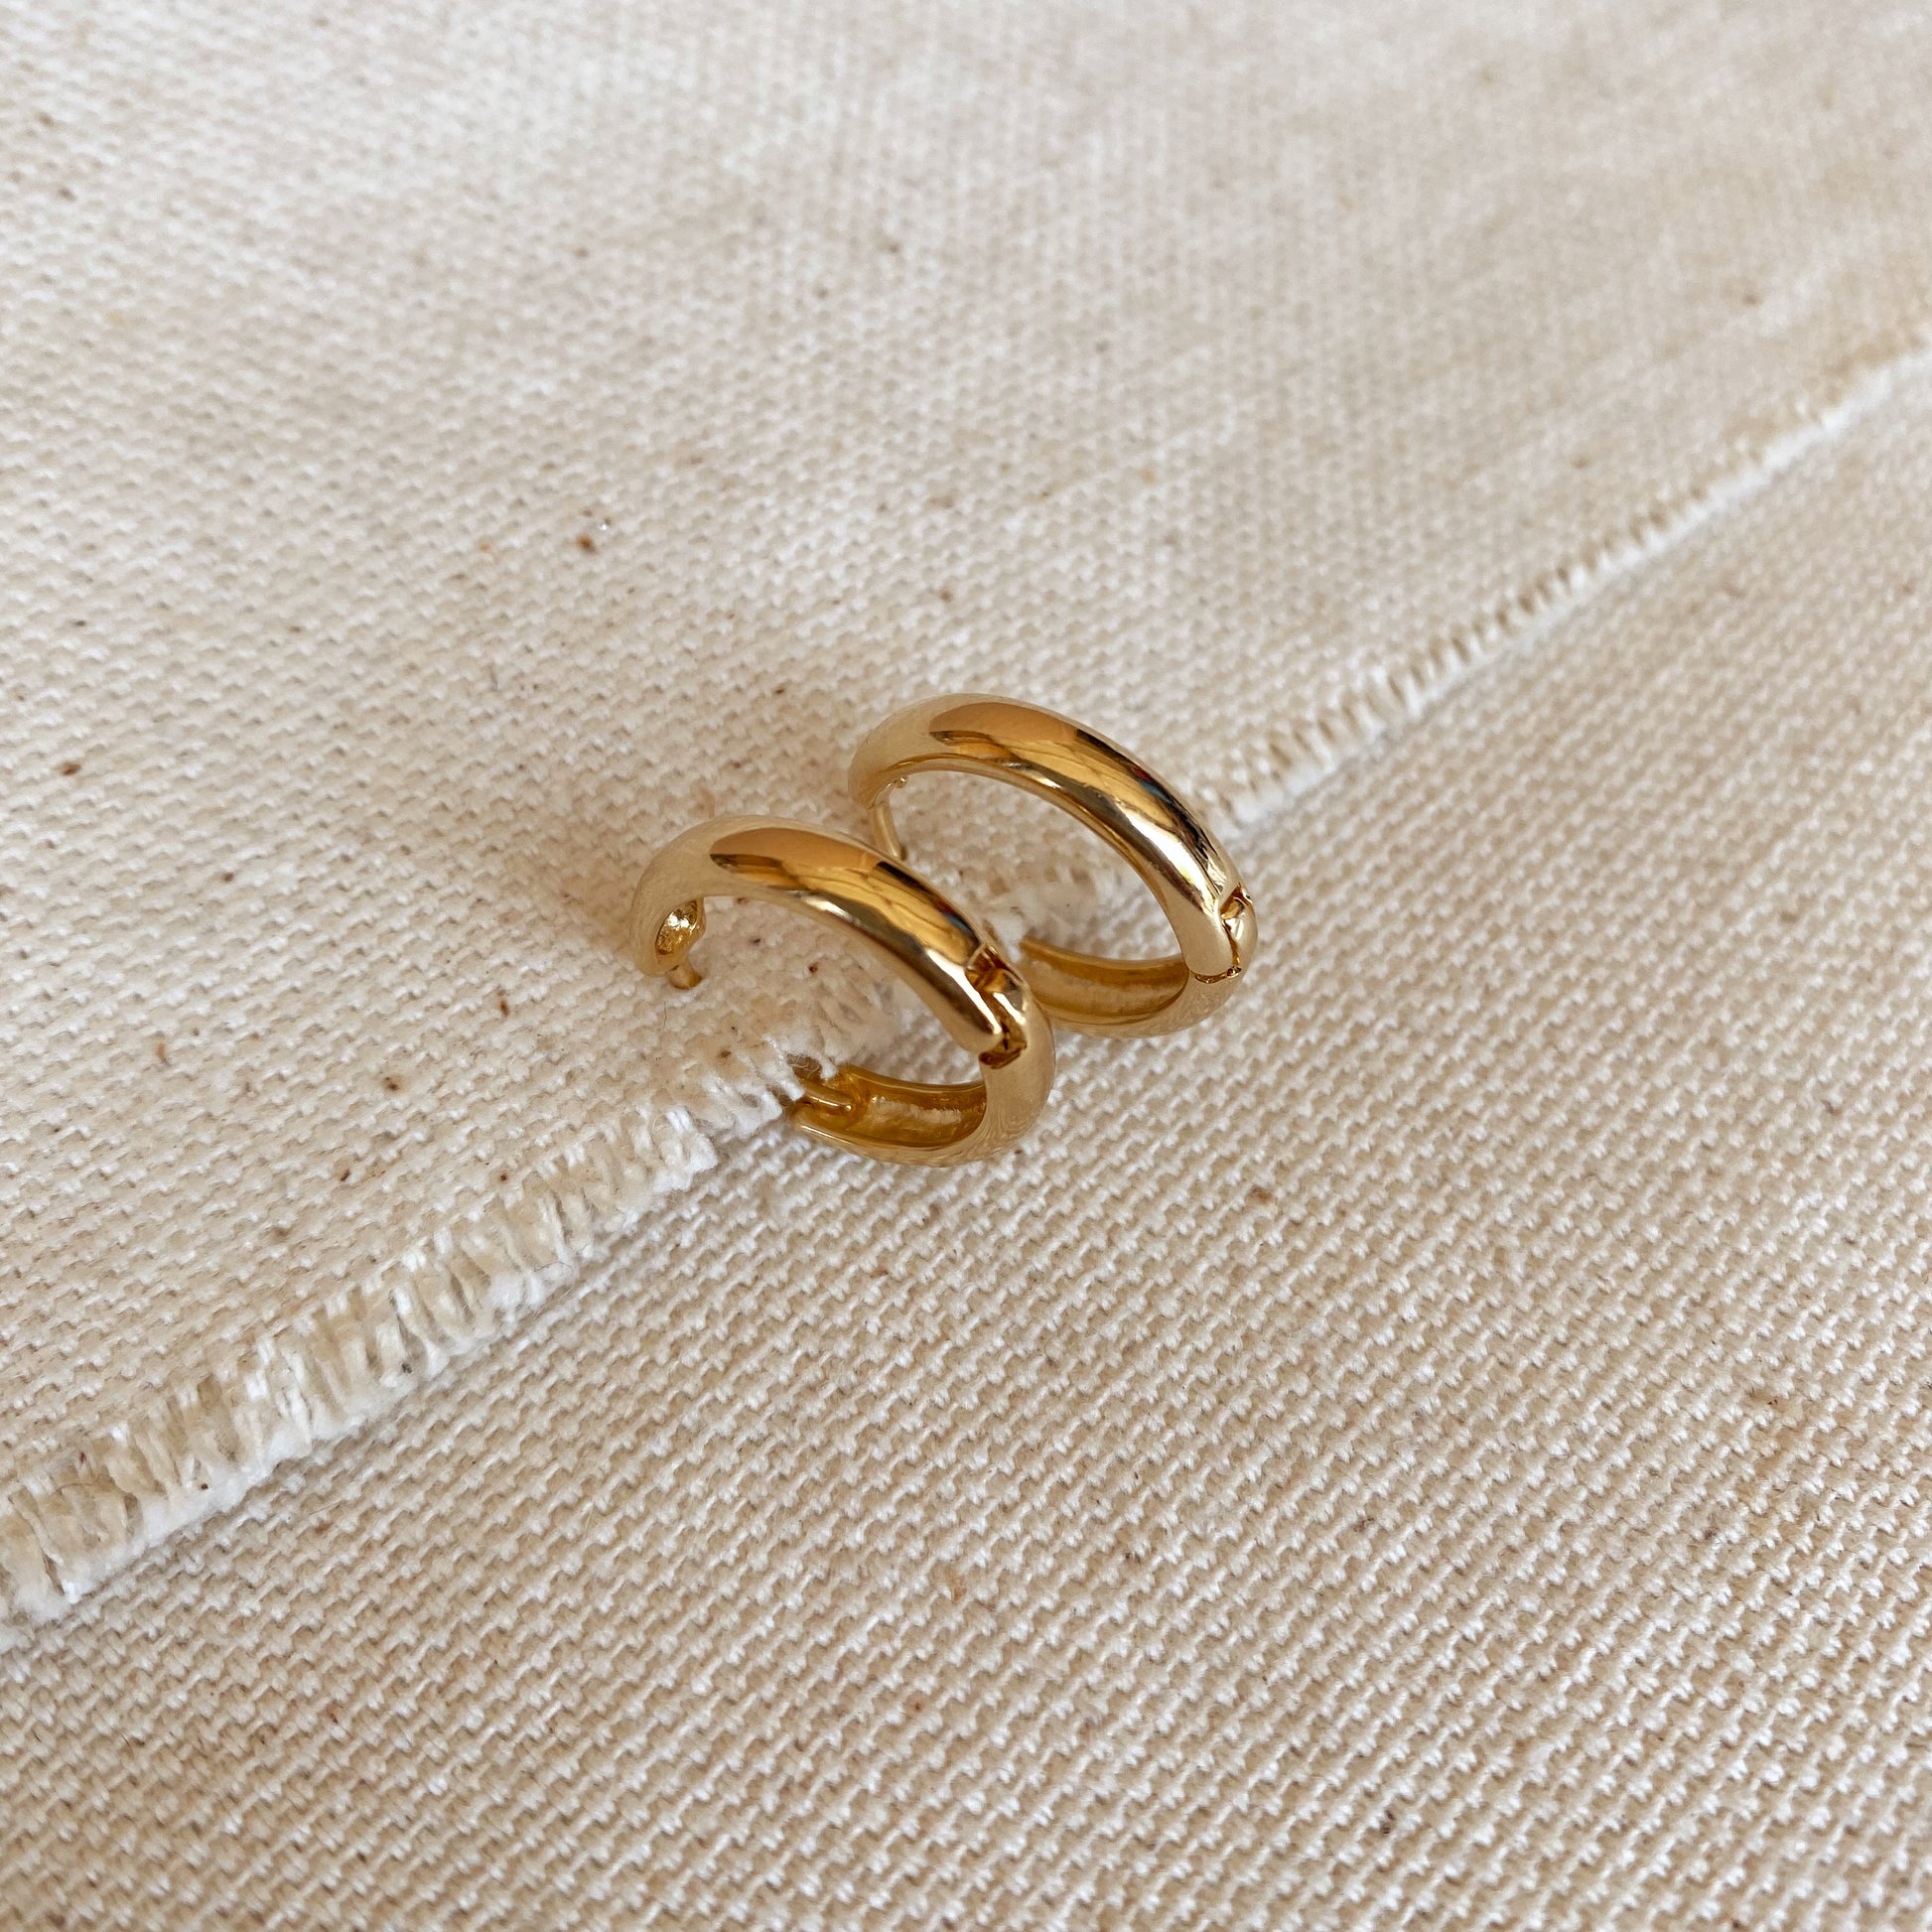 GoldFi 18k Gold Filled Plain Clicker Hoop Earrings